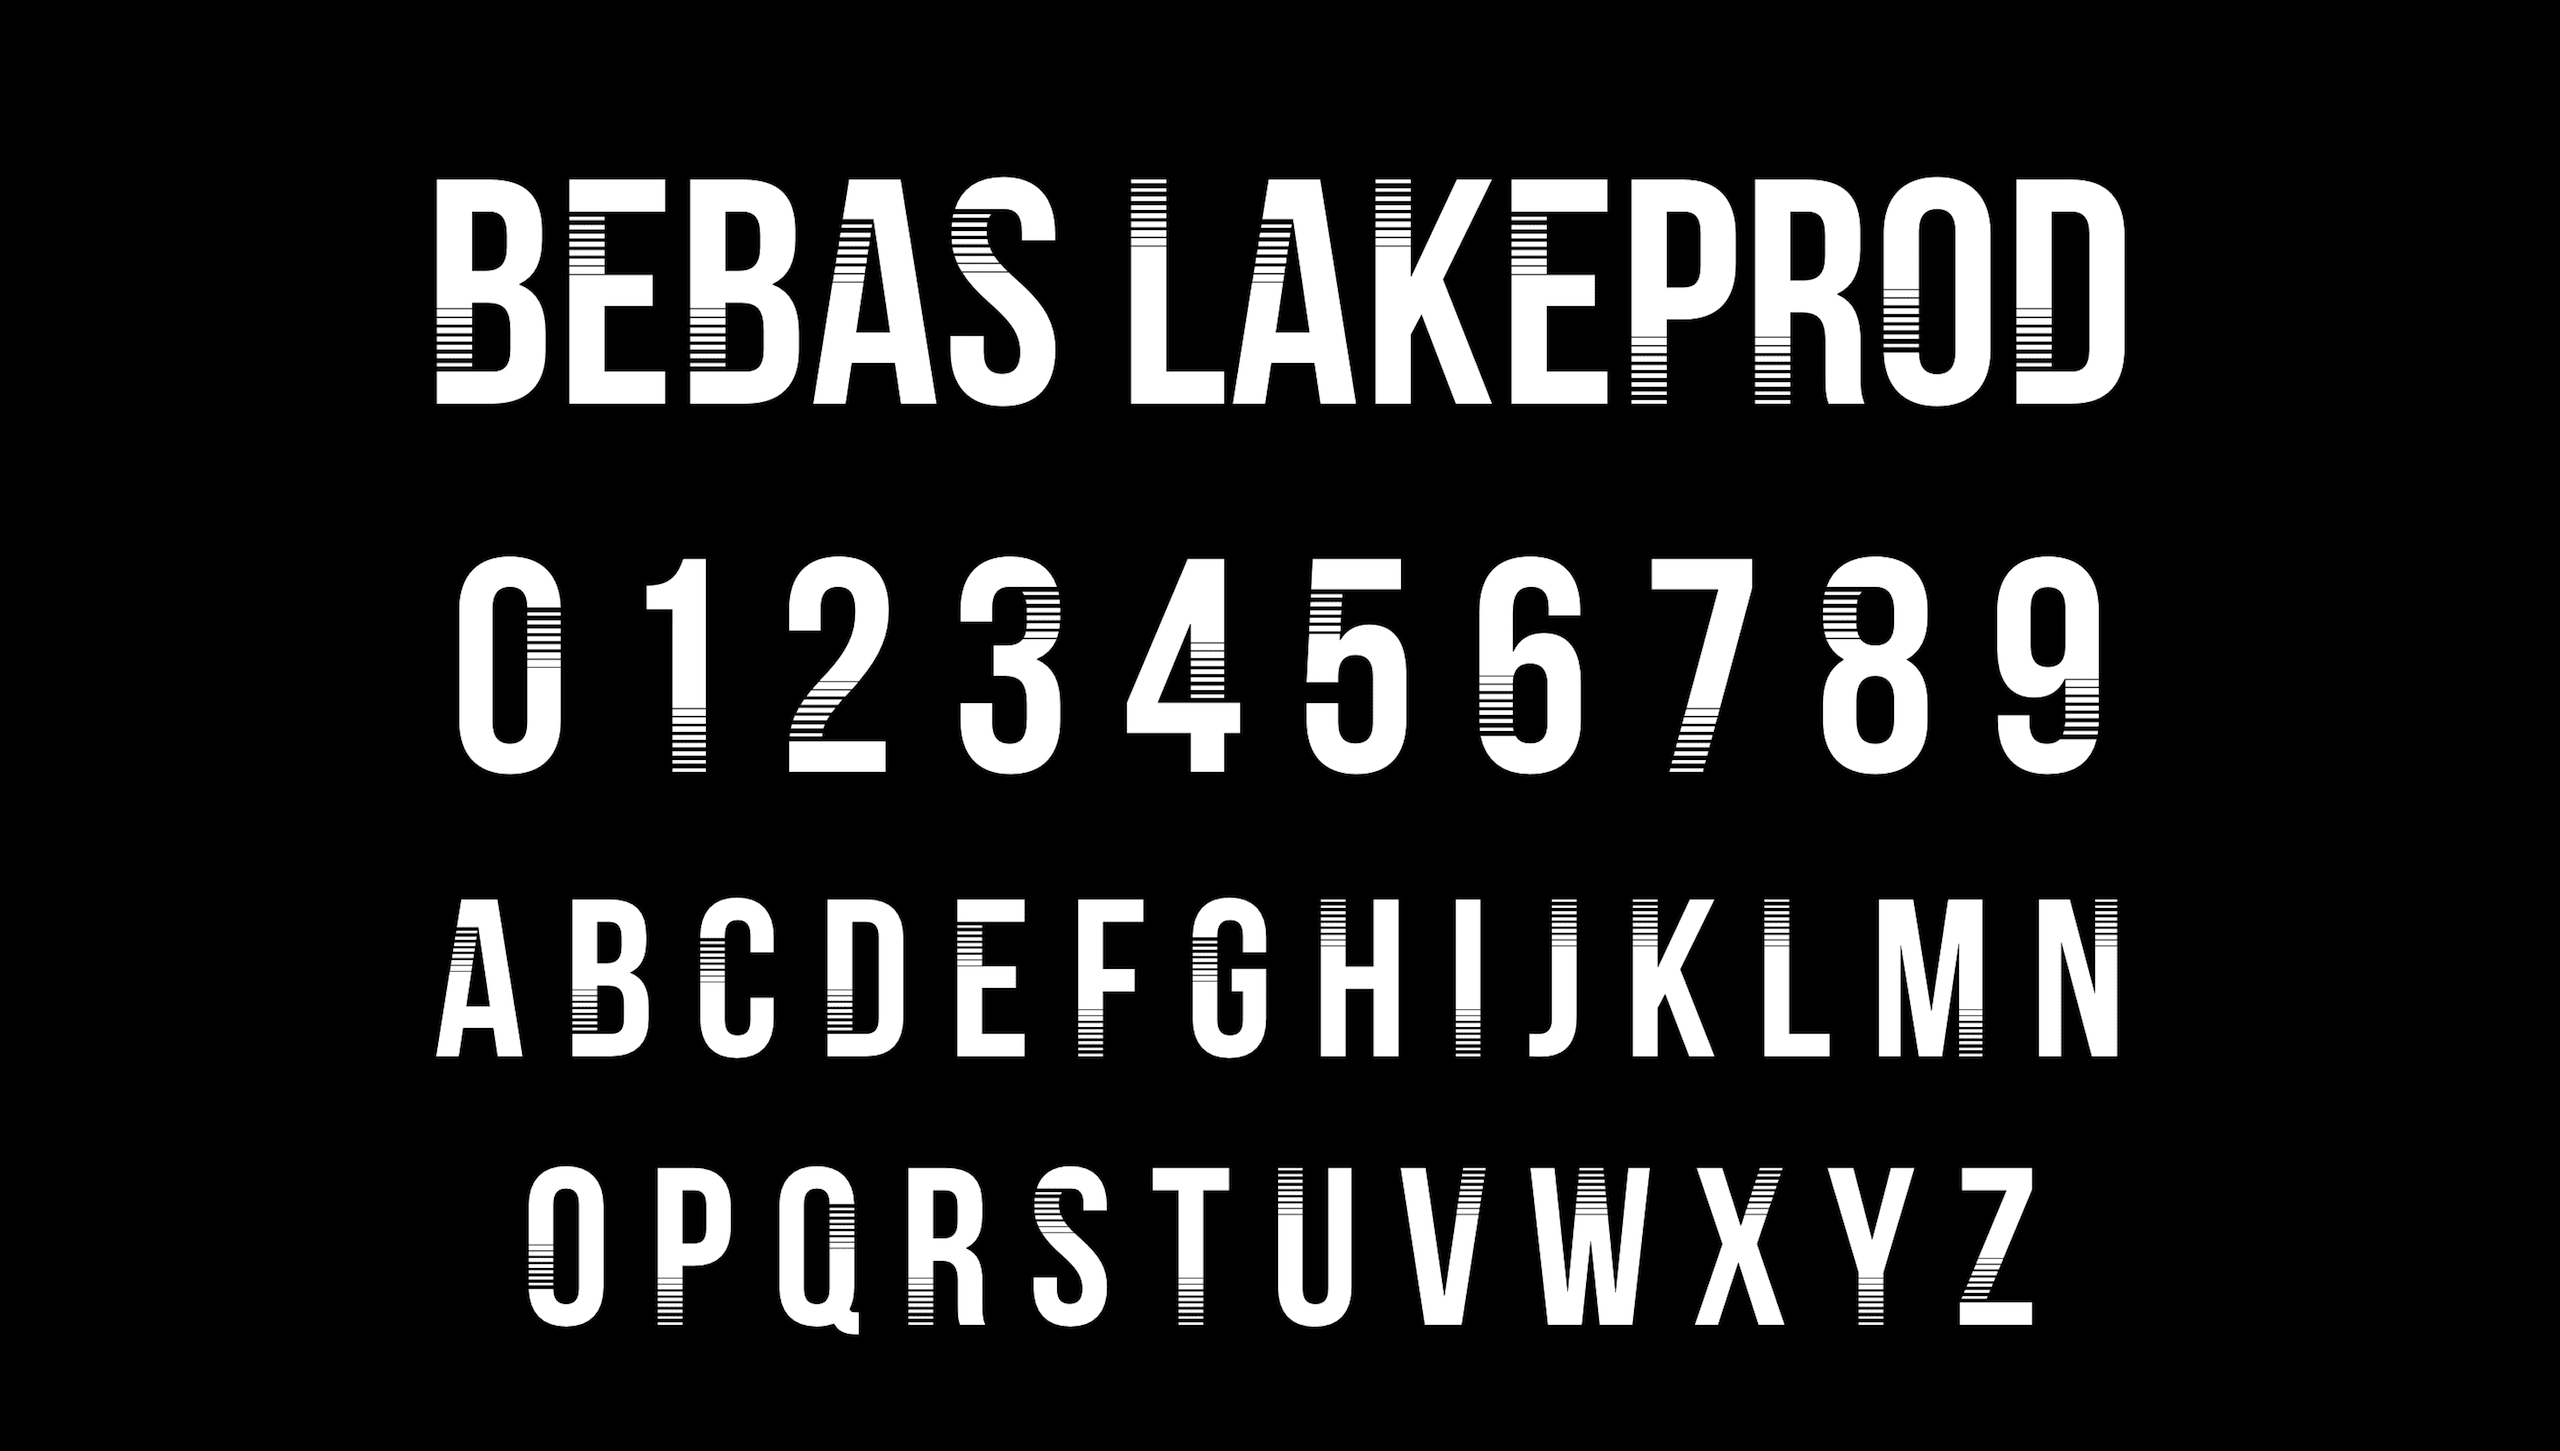 Habefast Study Case Lakeprod Typography Banner